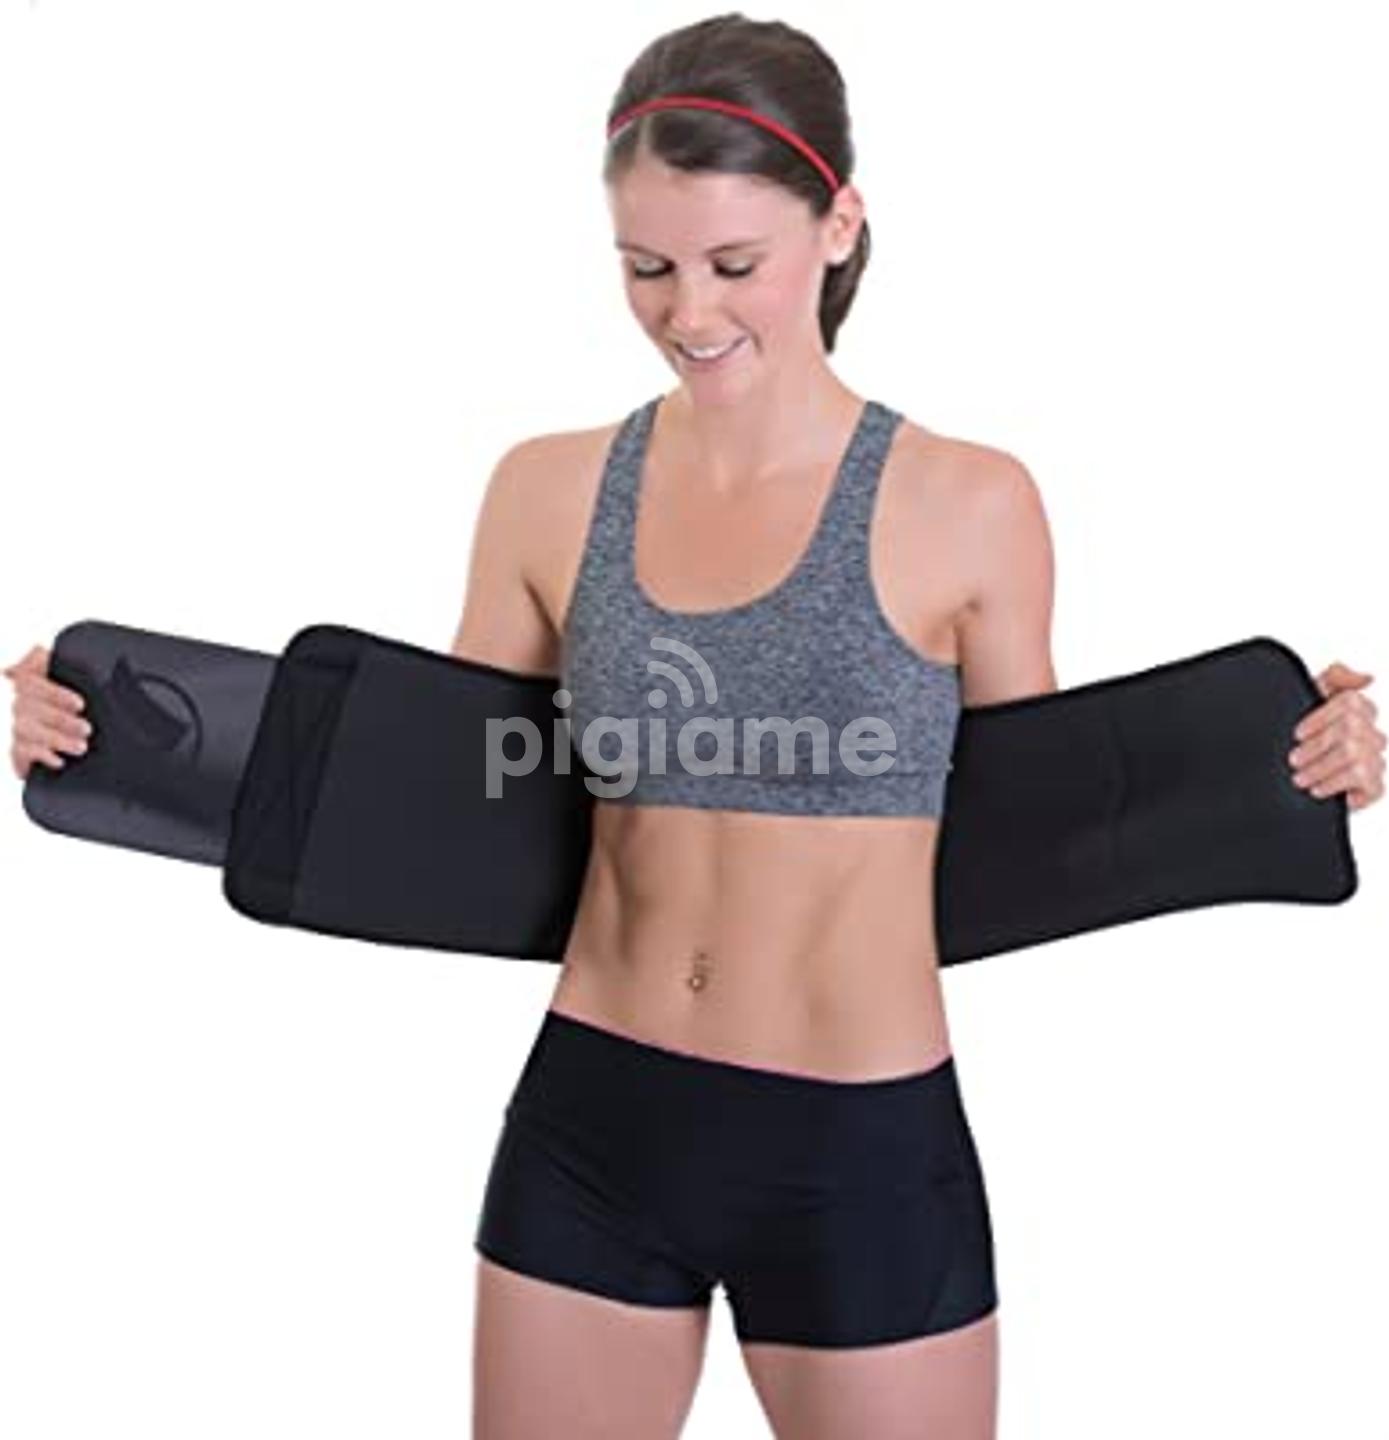 Gym Waist Trimmer - Sweat Band Waist Trainer Belt for Men and